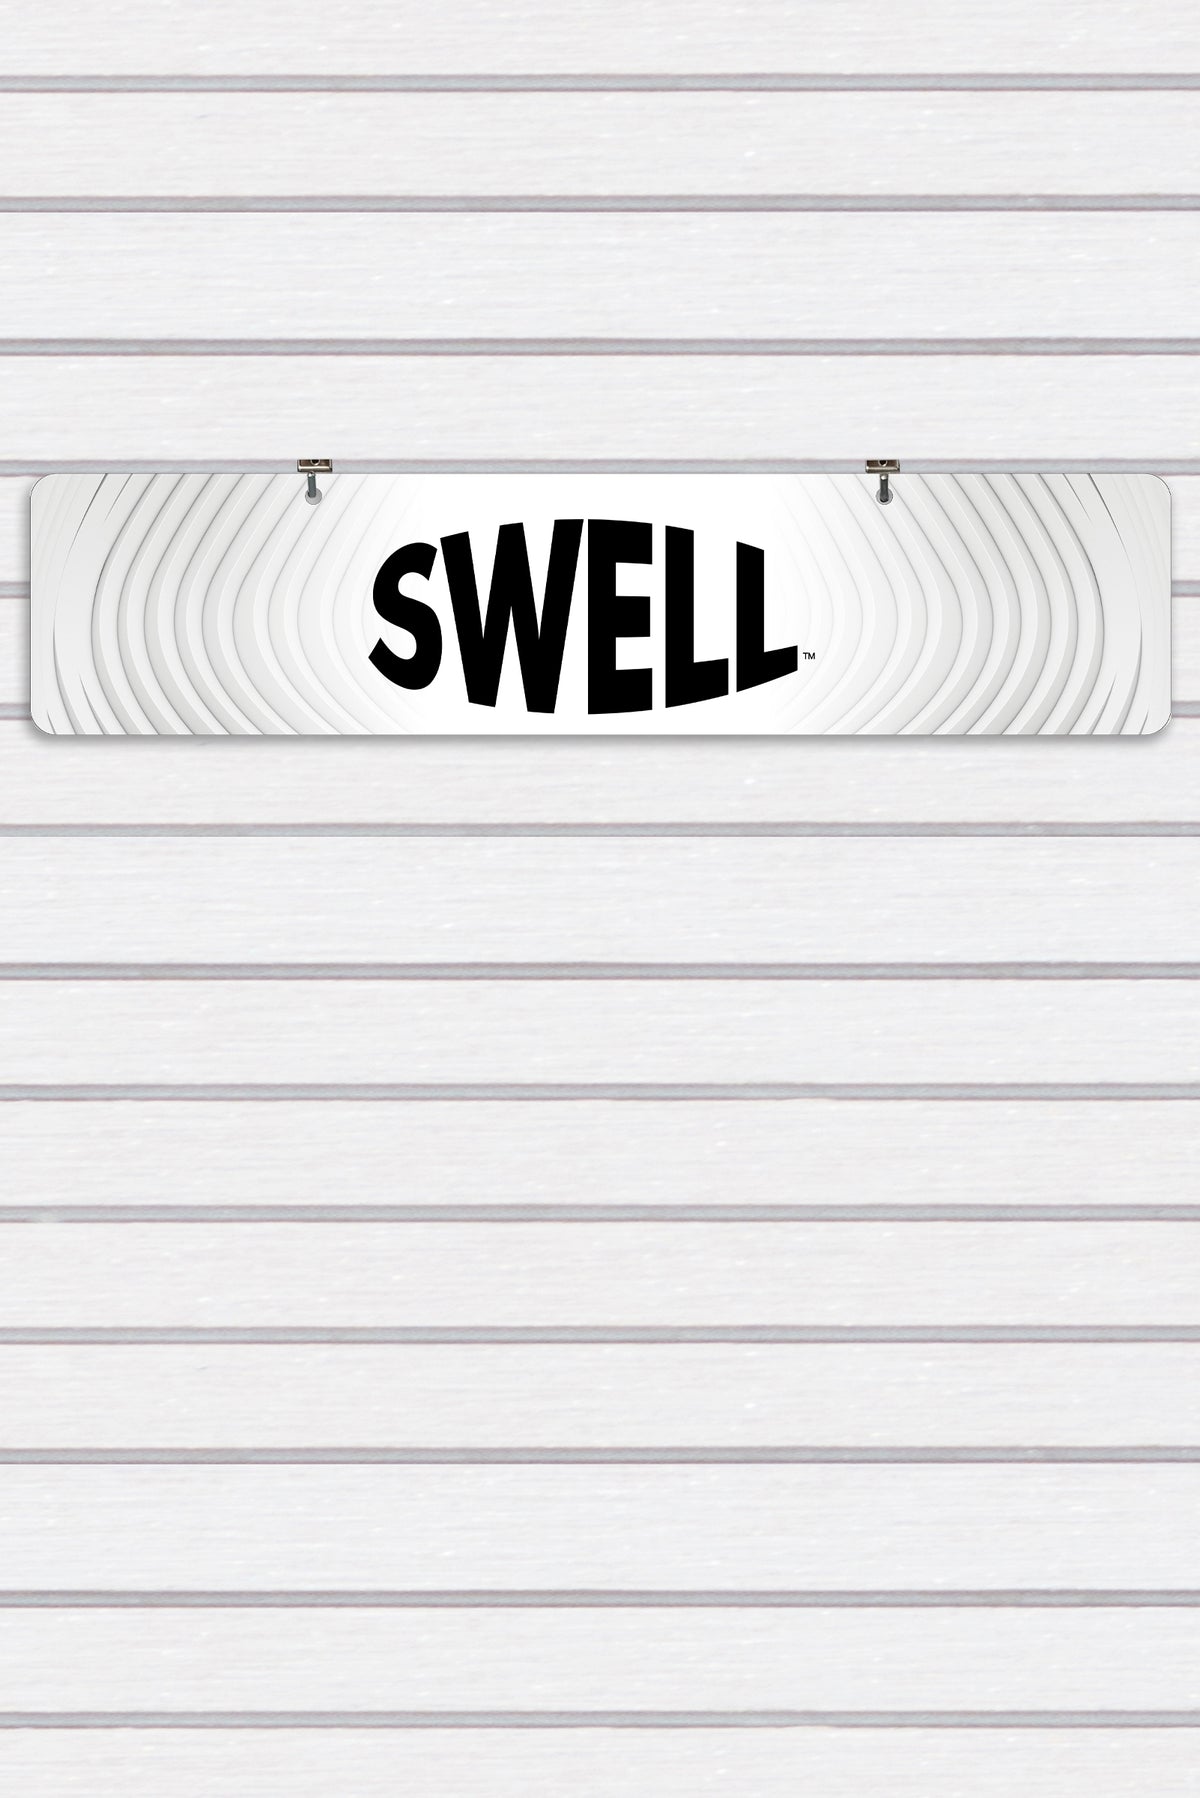 Swell Display Sign